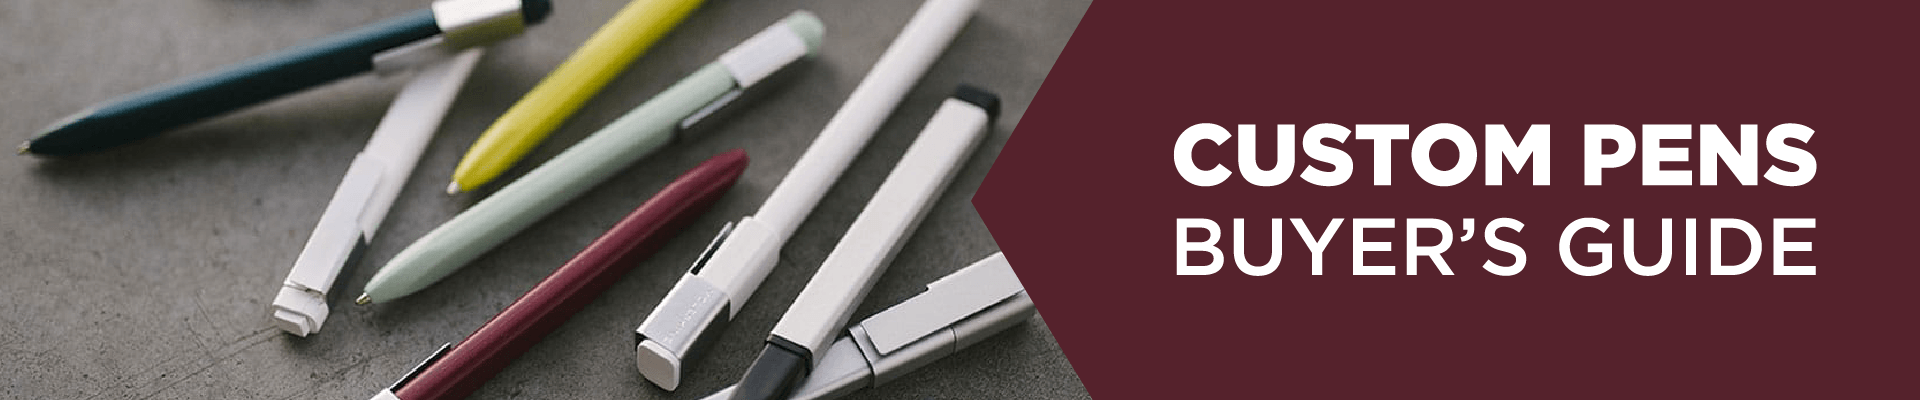 Custom Pens and Writing Utensils Buyers Guide